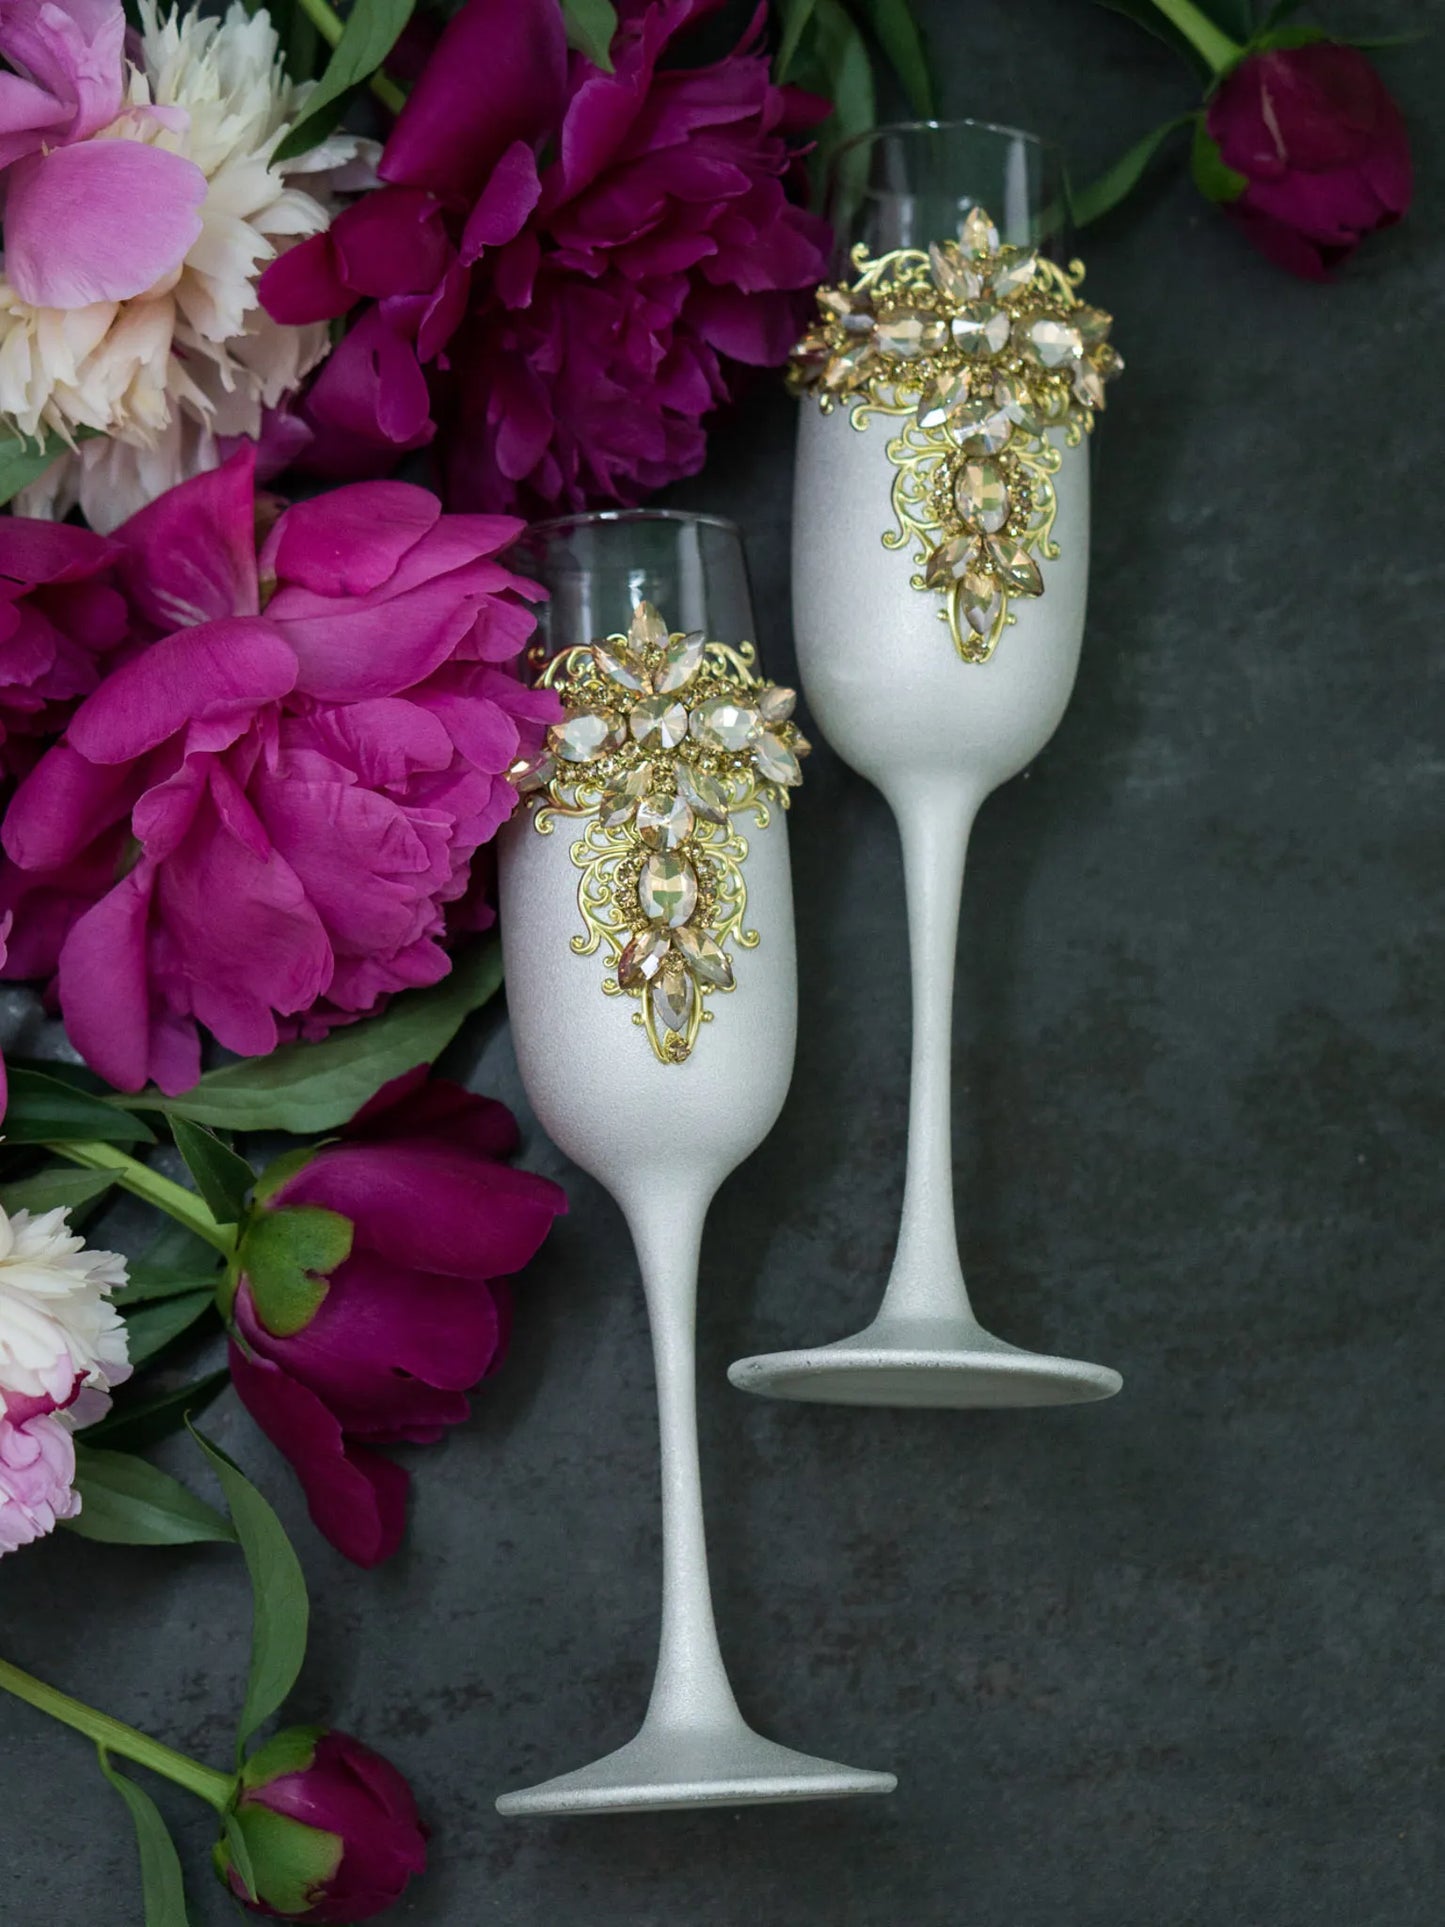 Elegant toasting glasses featuring intricate gold filigree